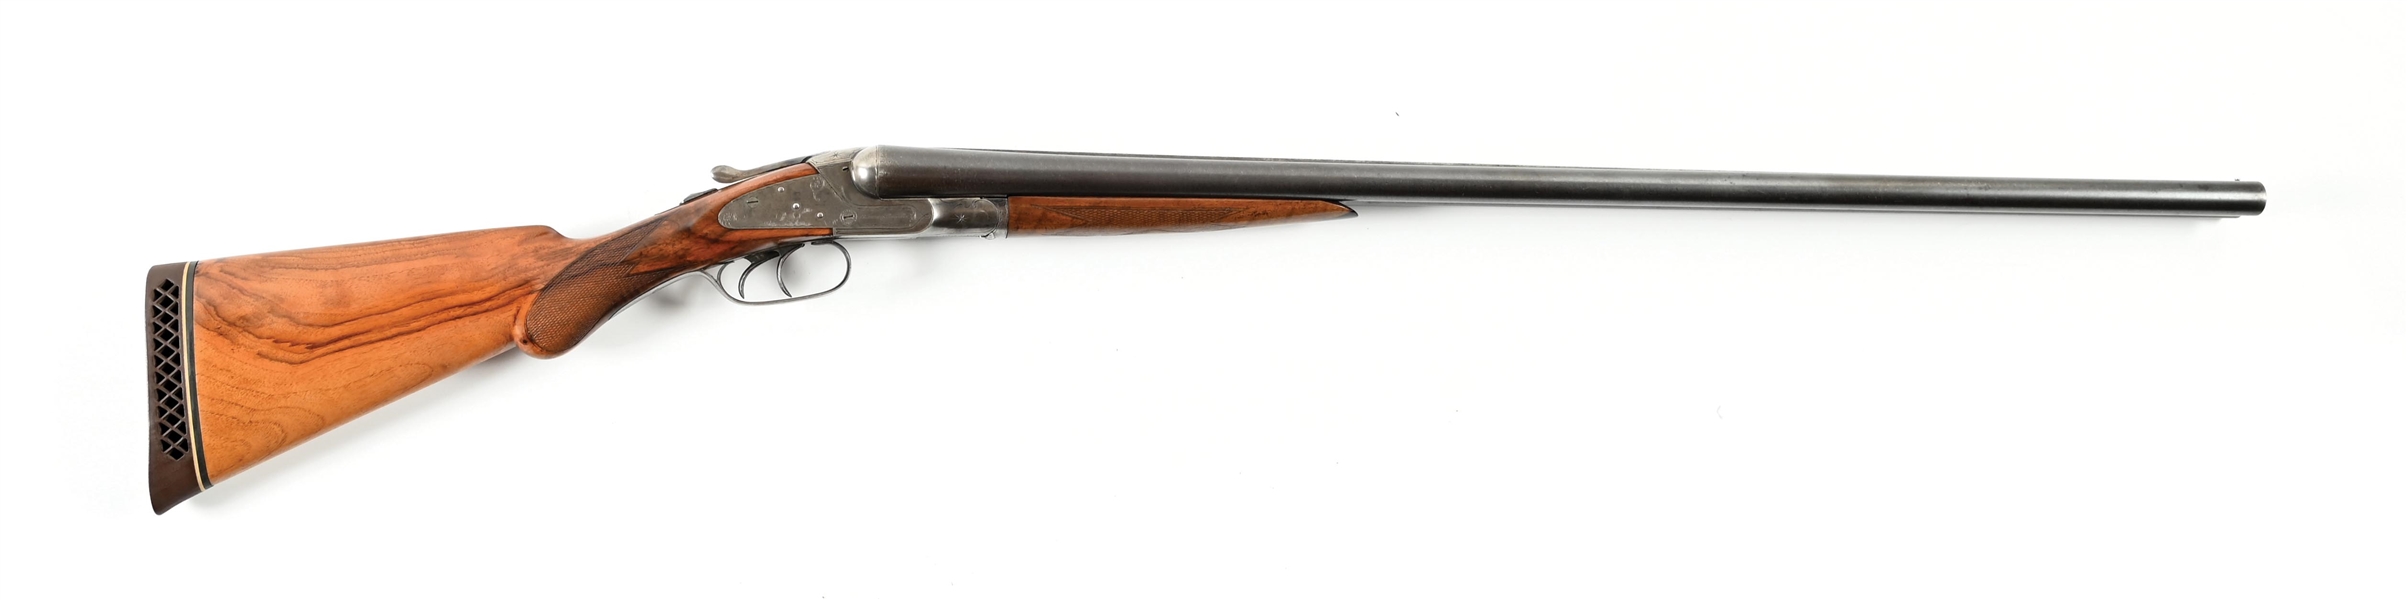 (C) BAKER GUN CO. SIDE BY SIDE SHOTGUN.